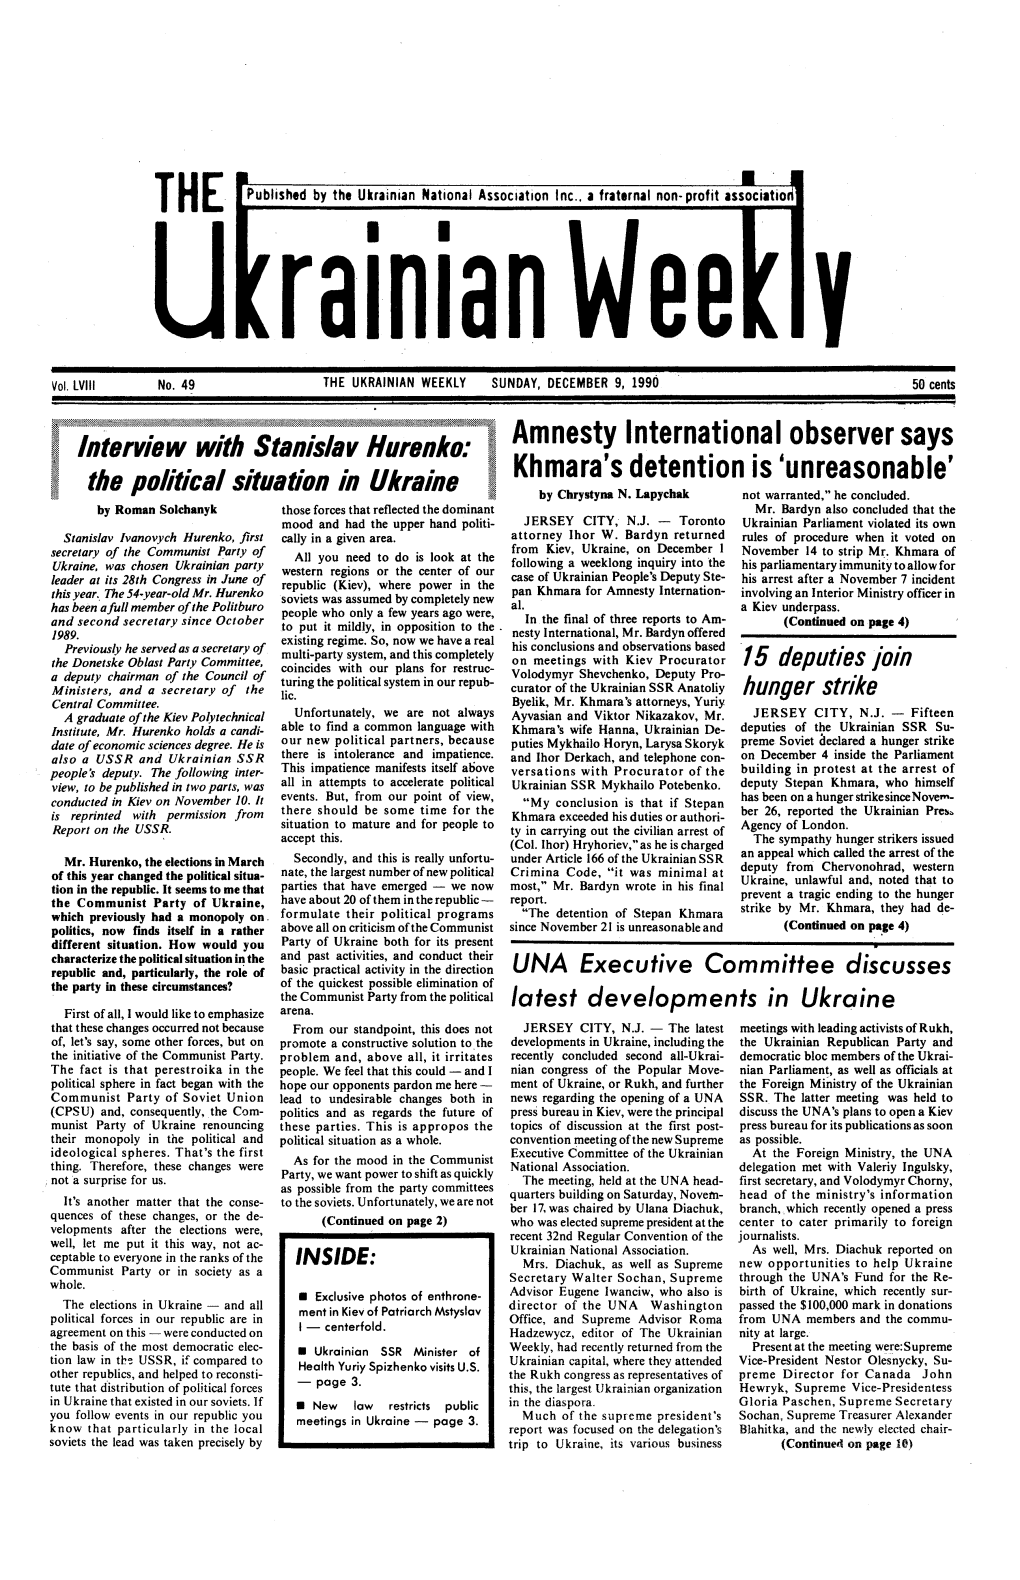 The Ukrainian Weekly 1990, No.49